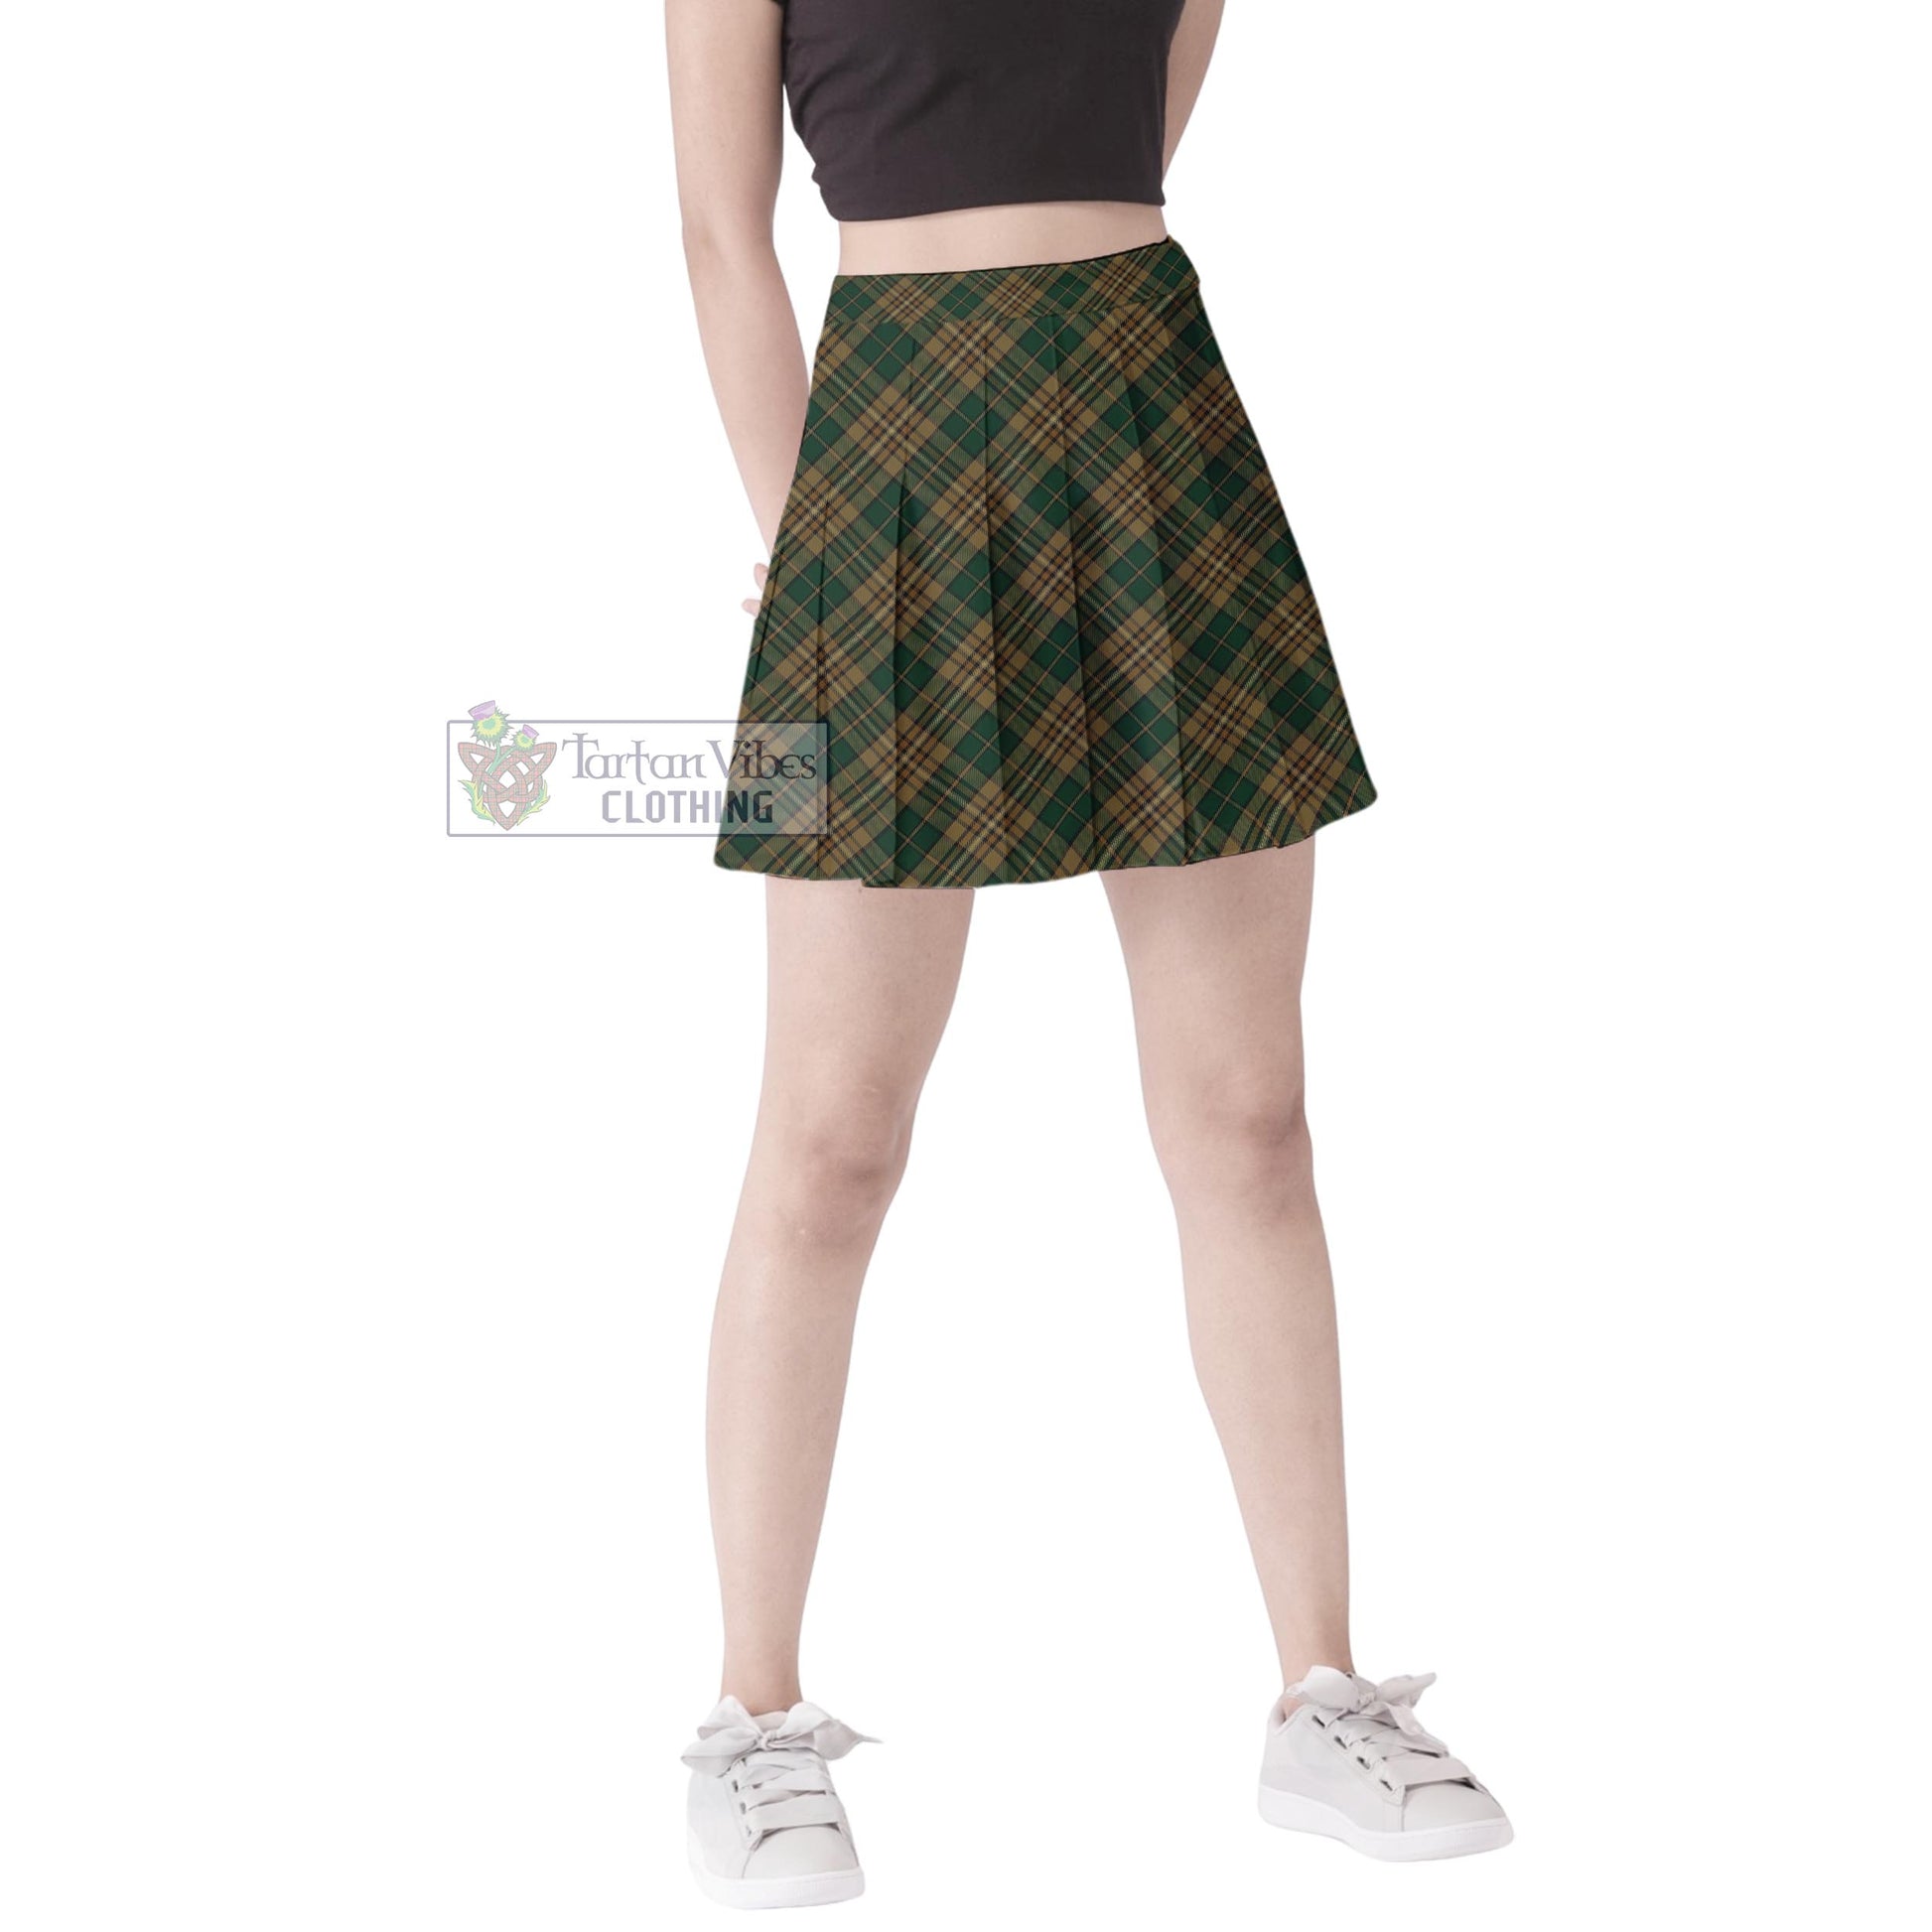 Tartan Vibes Clothing Fitzsimmons Tartan Women's Plated Mini Skirt